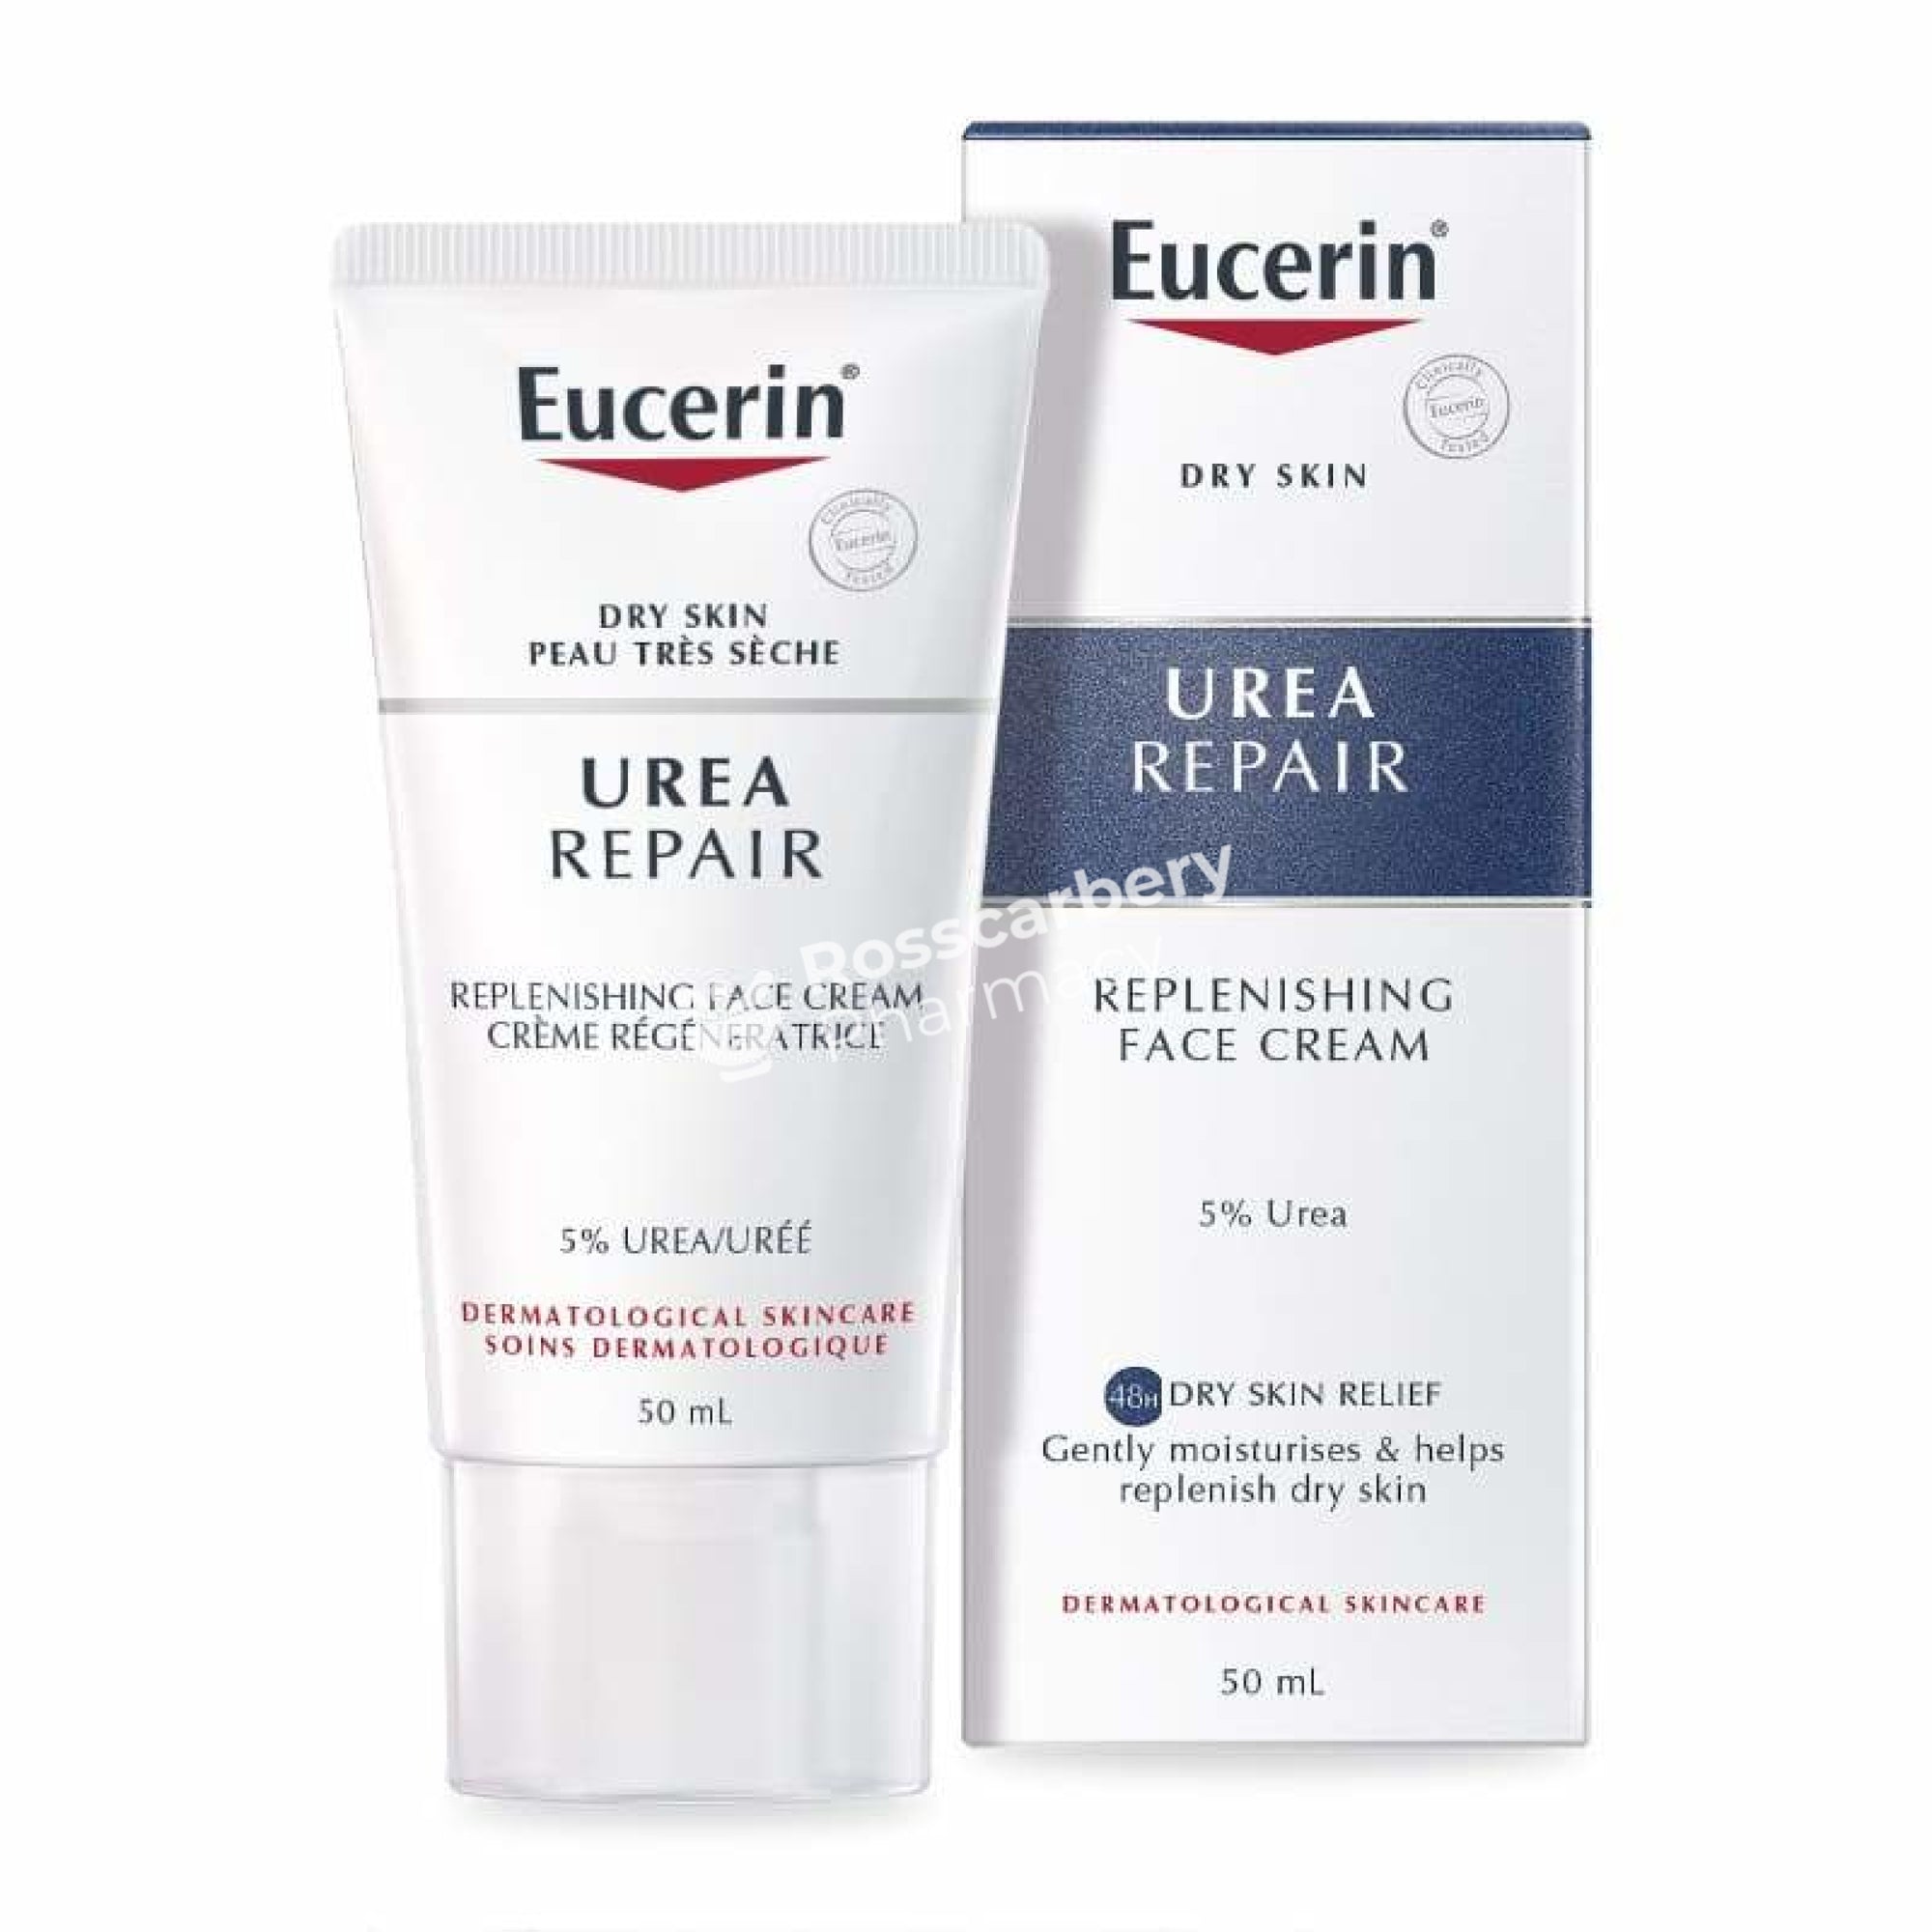 Eucerin Dry Skin Urea 5% Repair Replenishing Face Cream Facial Moisturiser